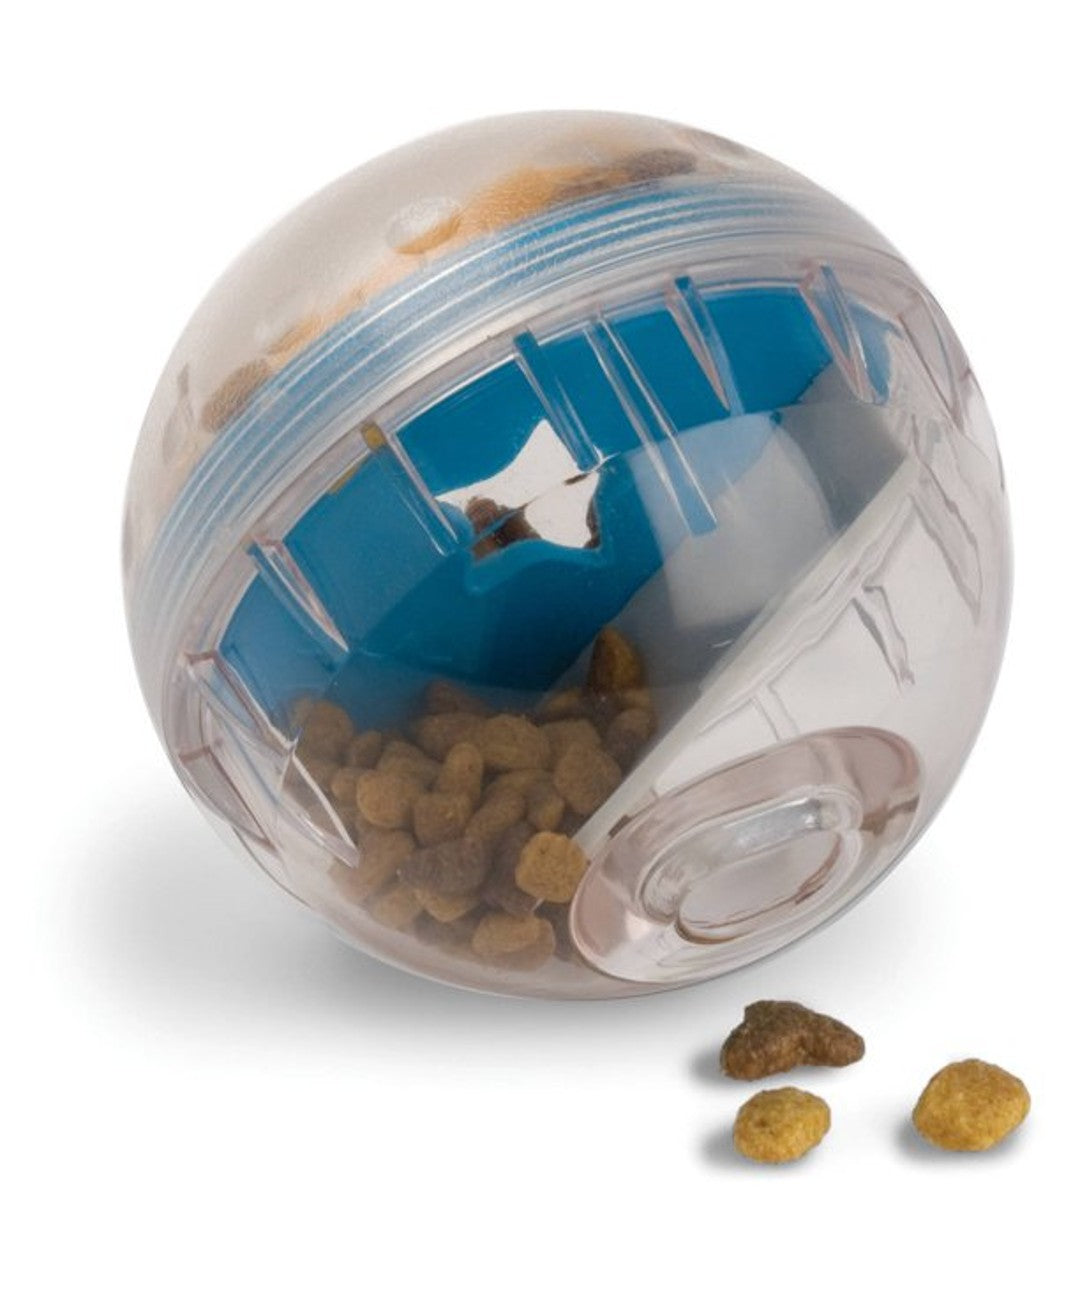 Pet Slow Feeder,Dog Treat Ball, Interactive Food Puzzles Ball for Dogs, Pet Slow Feeder Ball - Green, Size: Medium